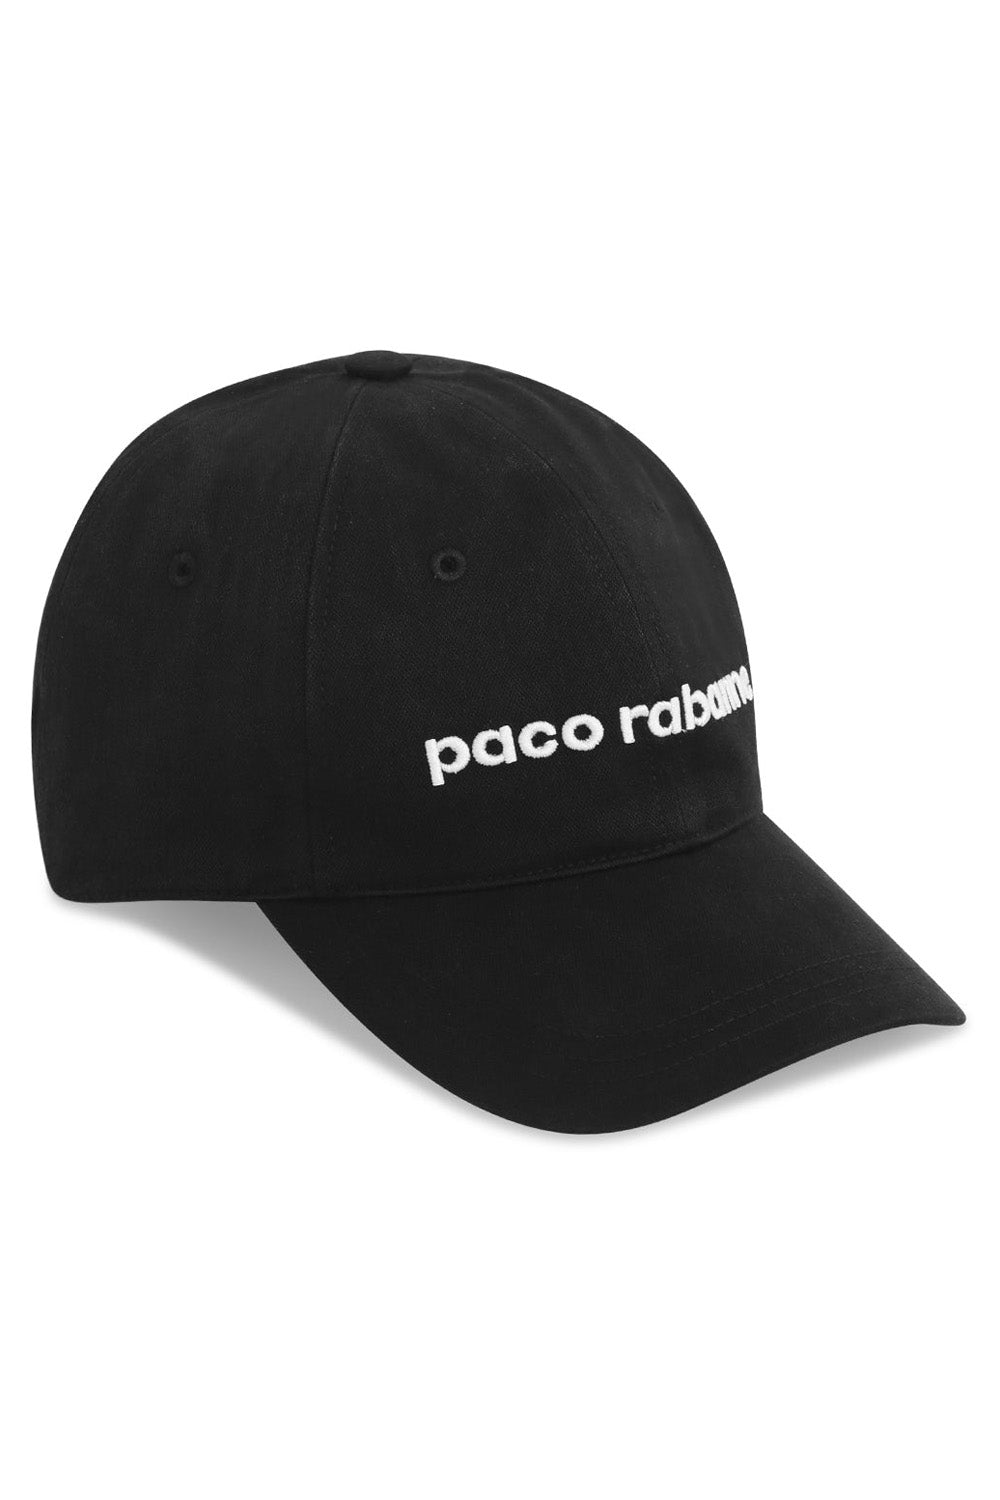 PACO RABANNE ACCESSORIES BLACK PACO RABANNE LOGO CAP BLACK